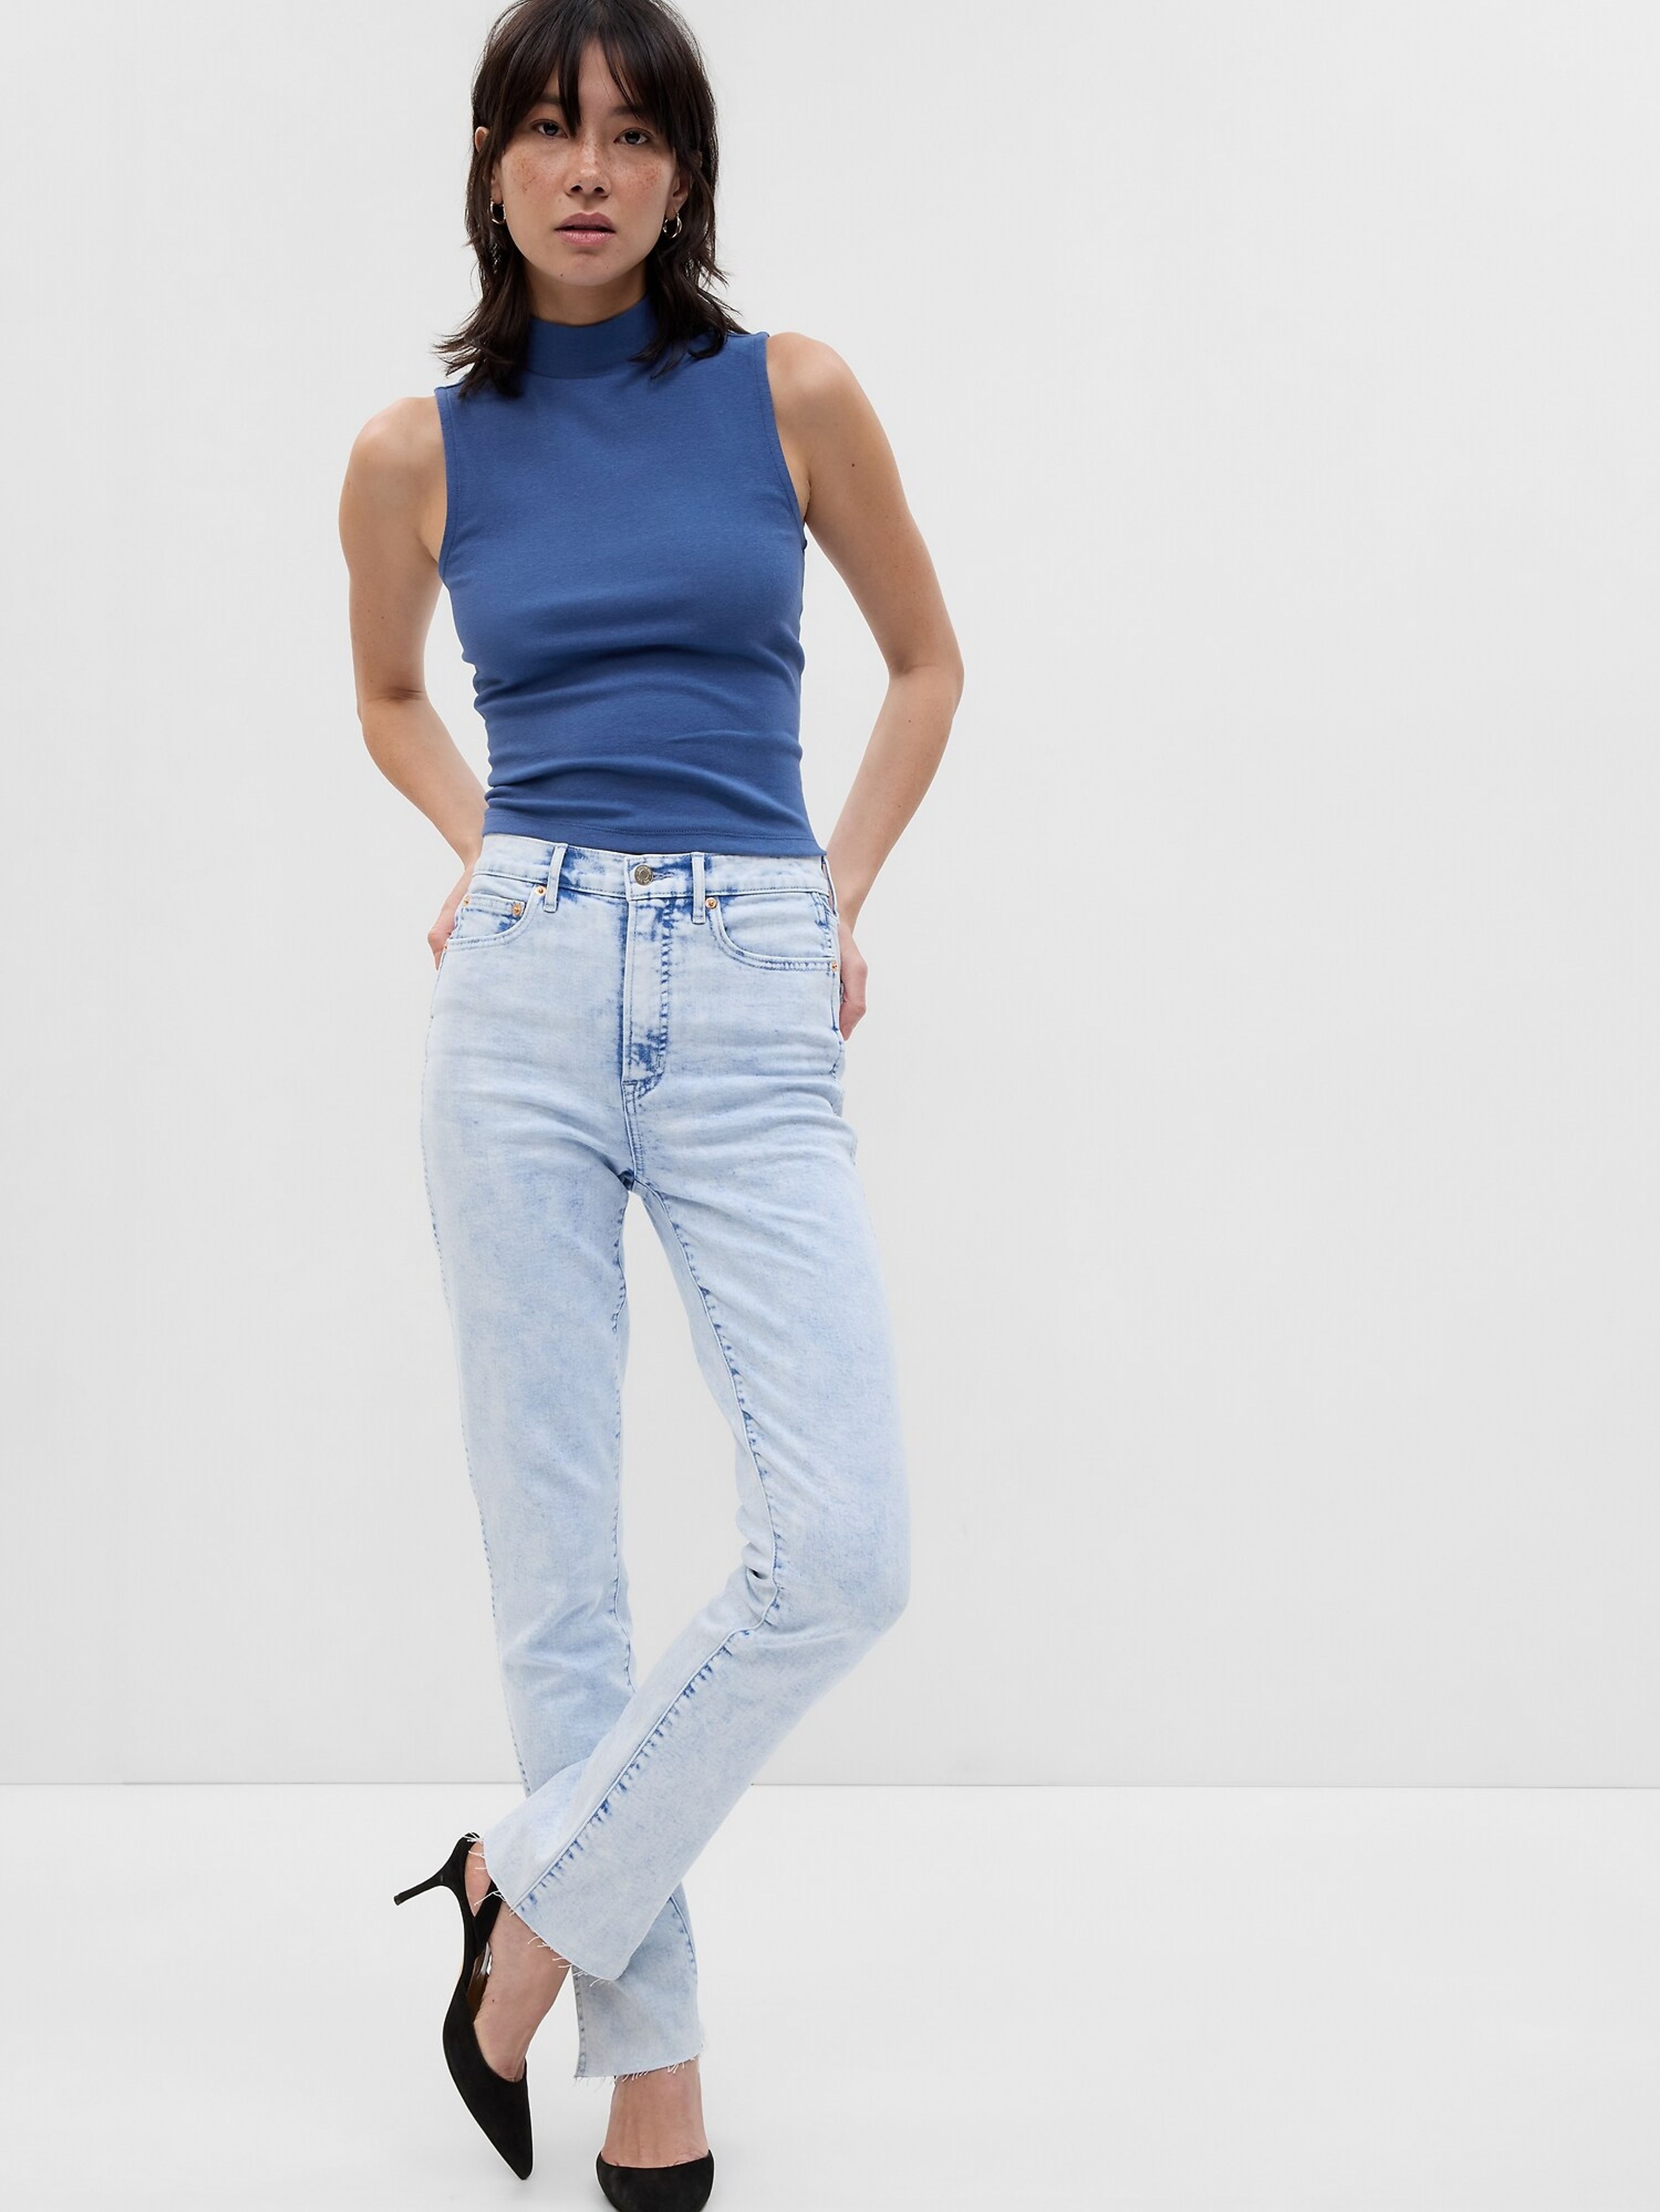 Jeans – Vintage Slim High Rise